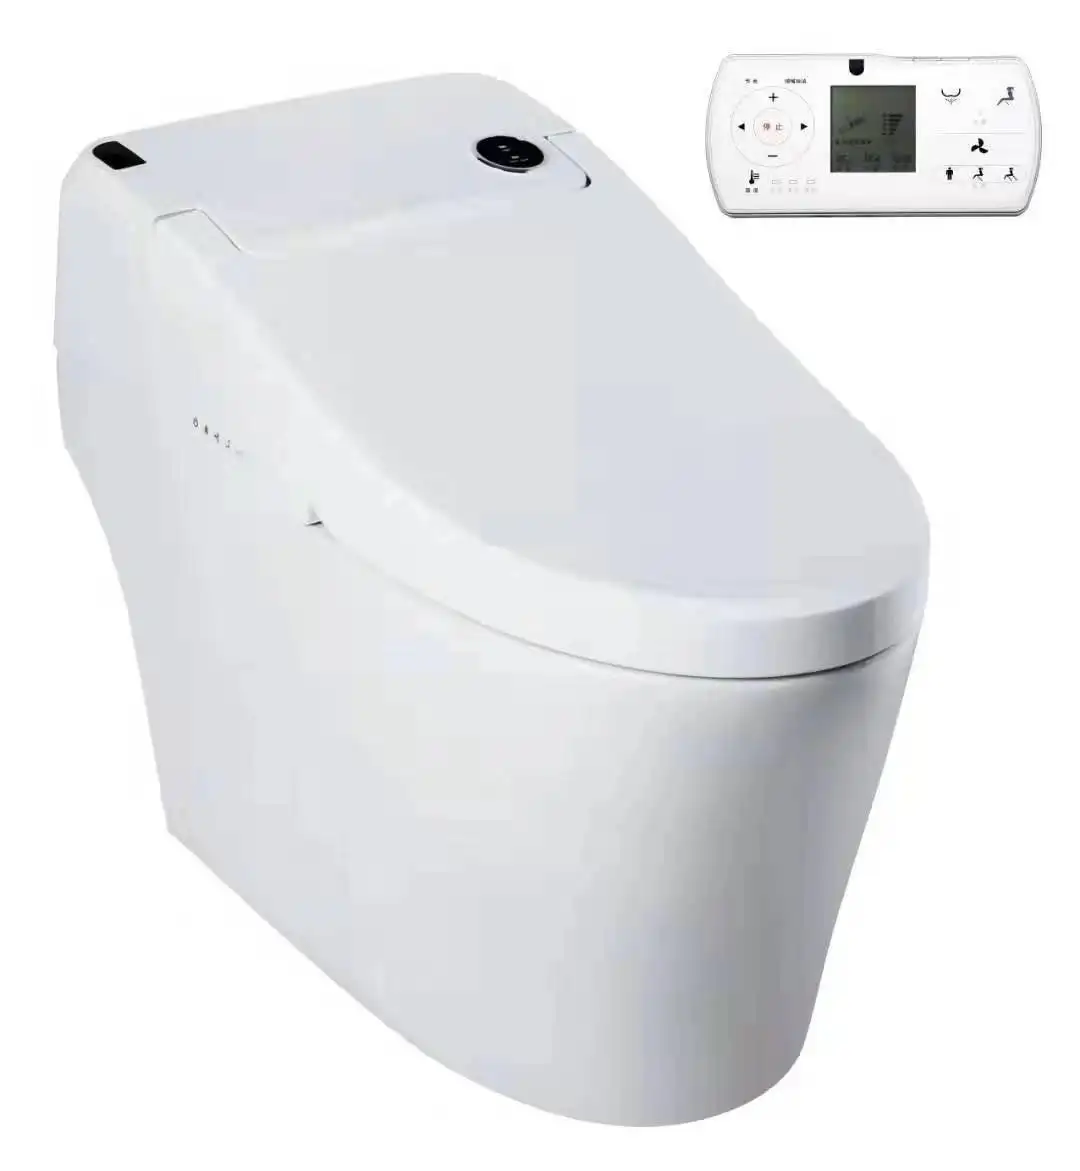 आधुनिक ऑटो-फ्लिप मंजिल-यूरोप के लिए खड़े शौचालय स्मार्ट बुद्धिमान एक टुकड़ा रिमोट कंट्रोल सेंसर स्मार्ट बुद्धिमान शौचालय